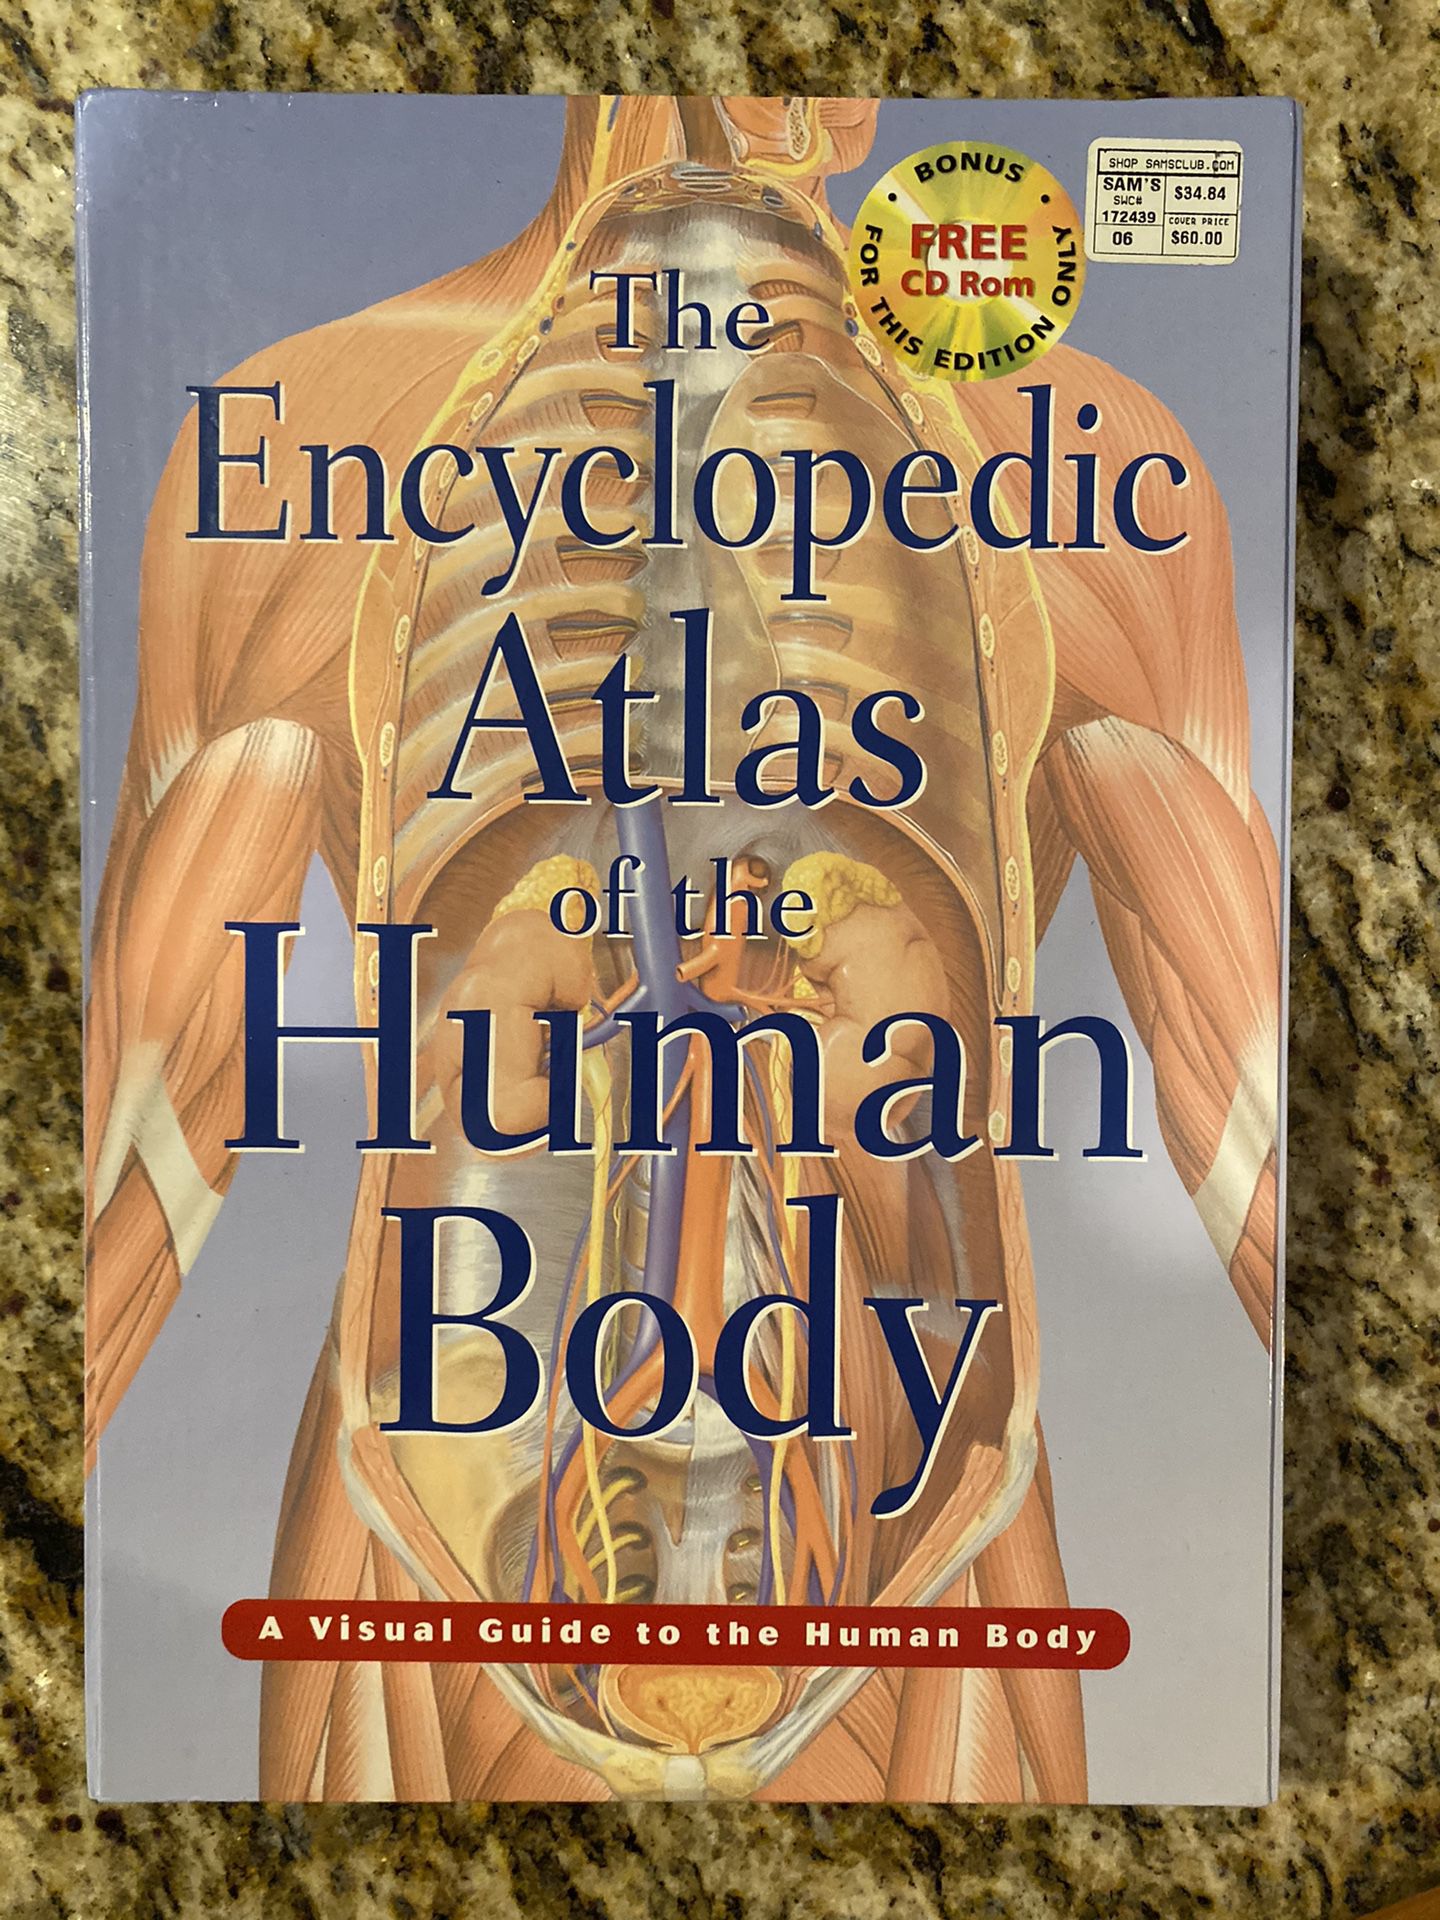 Encyclopedic human body book with CD $5